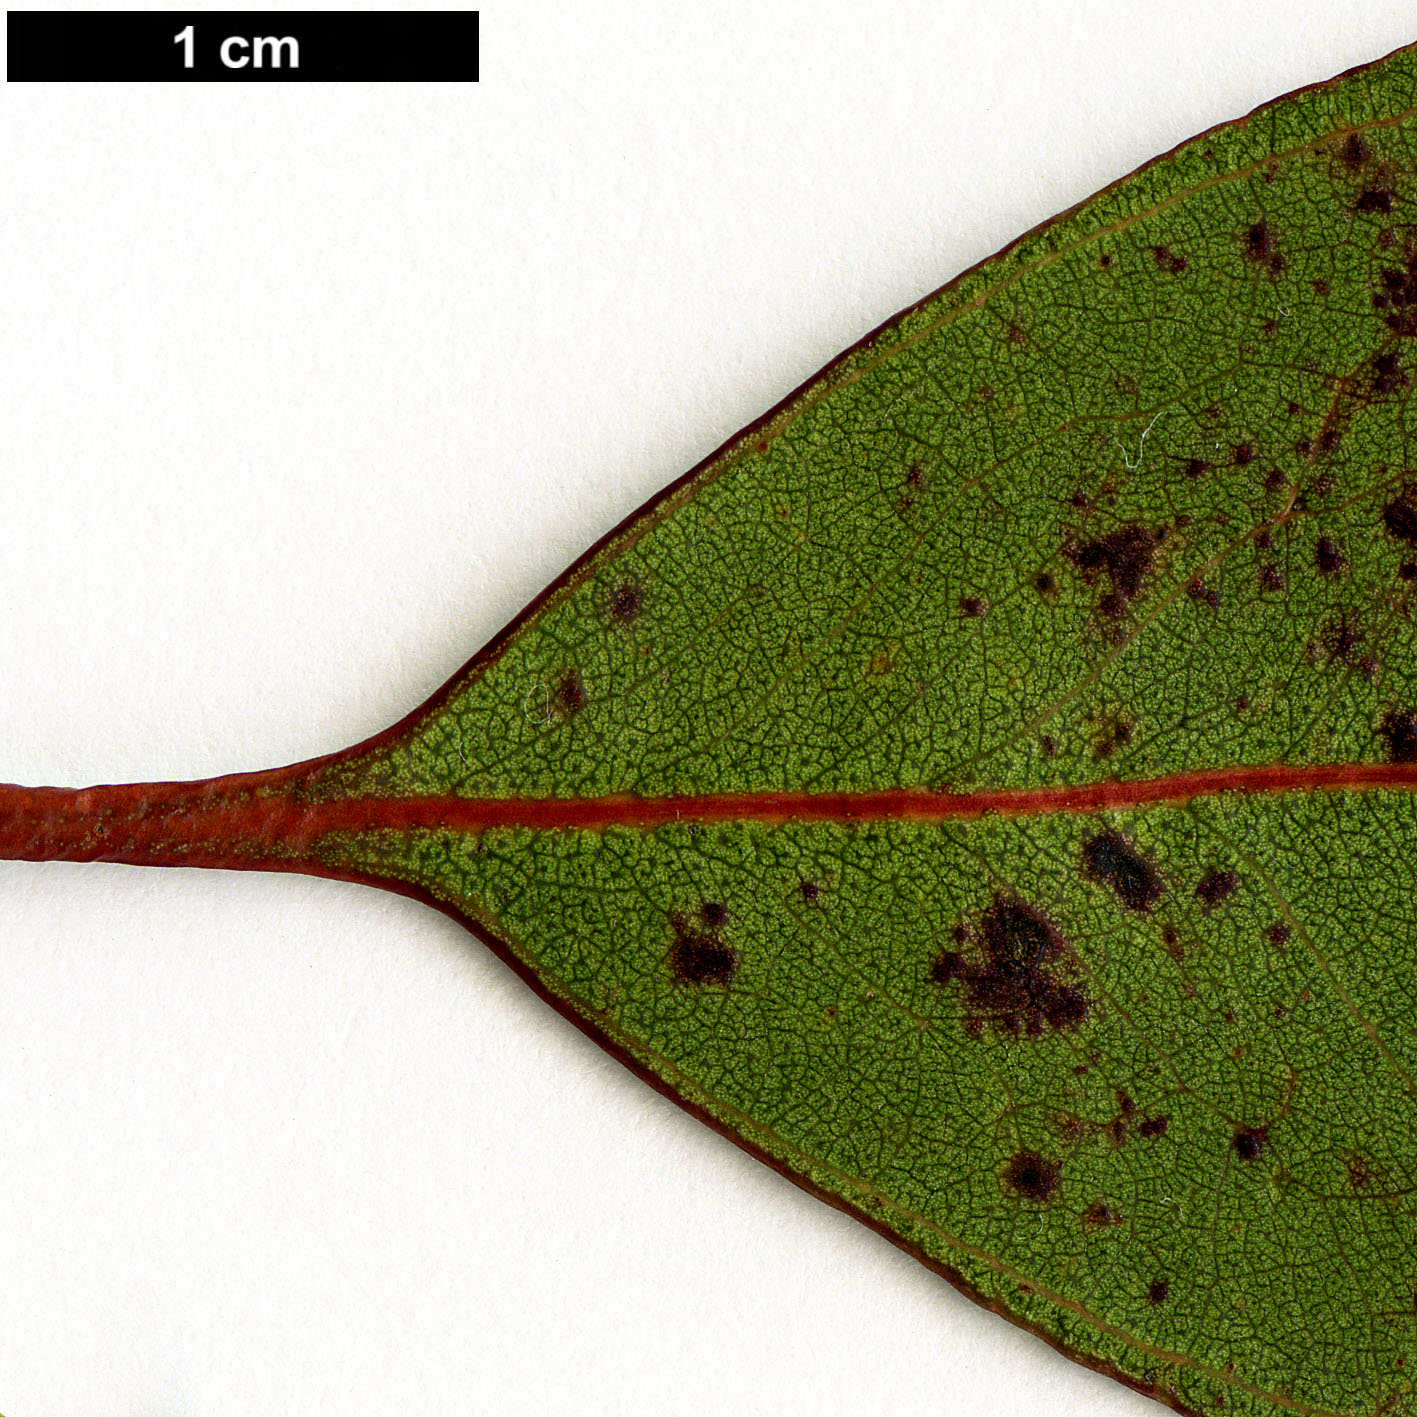 High resolution image: Family: Myrtaceae - Genus: Eucalyptus - Taxon: brookeriana